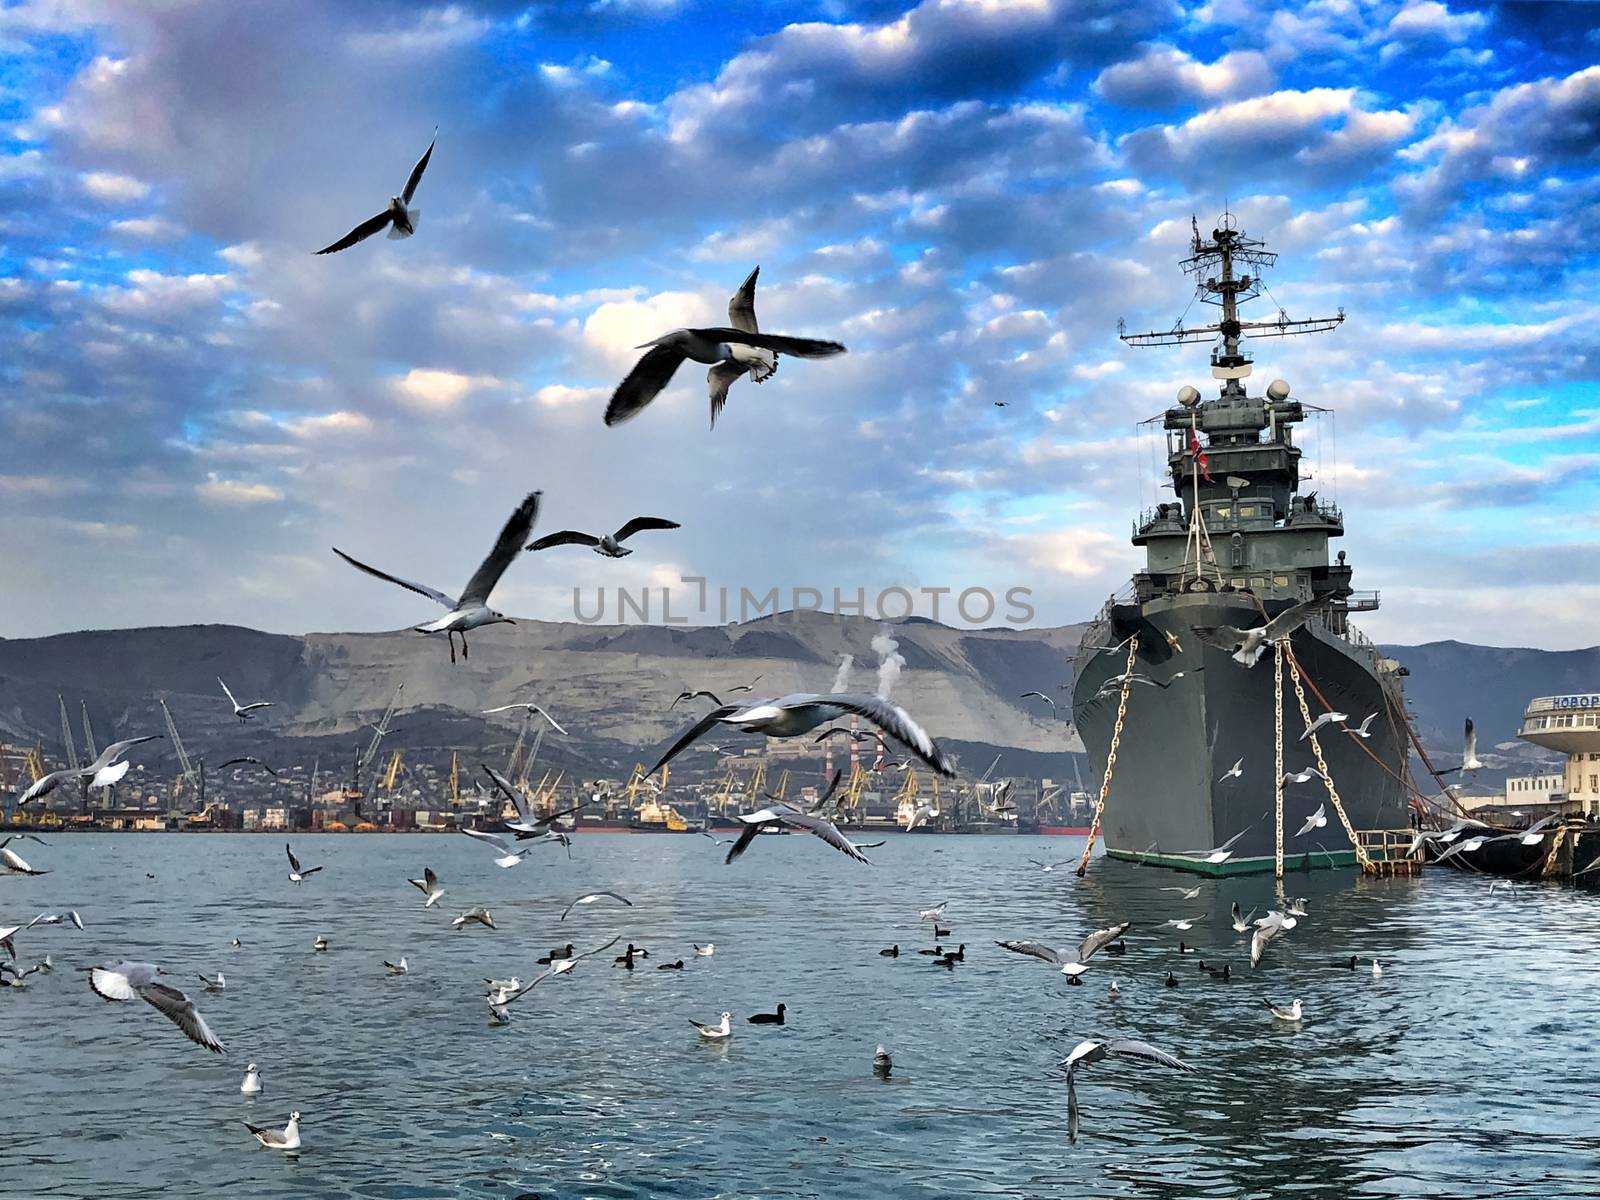 Seagulls in the port of Novorossiysk near the ship of the cruiser Mikhail Kutuzov.